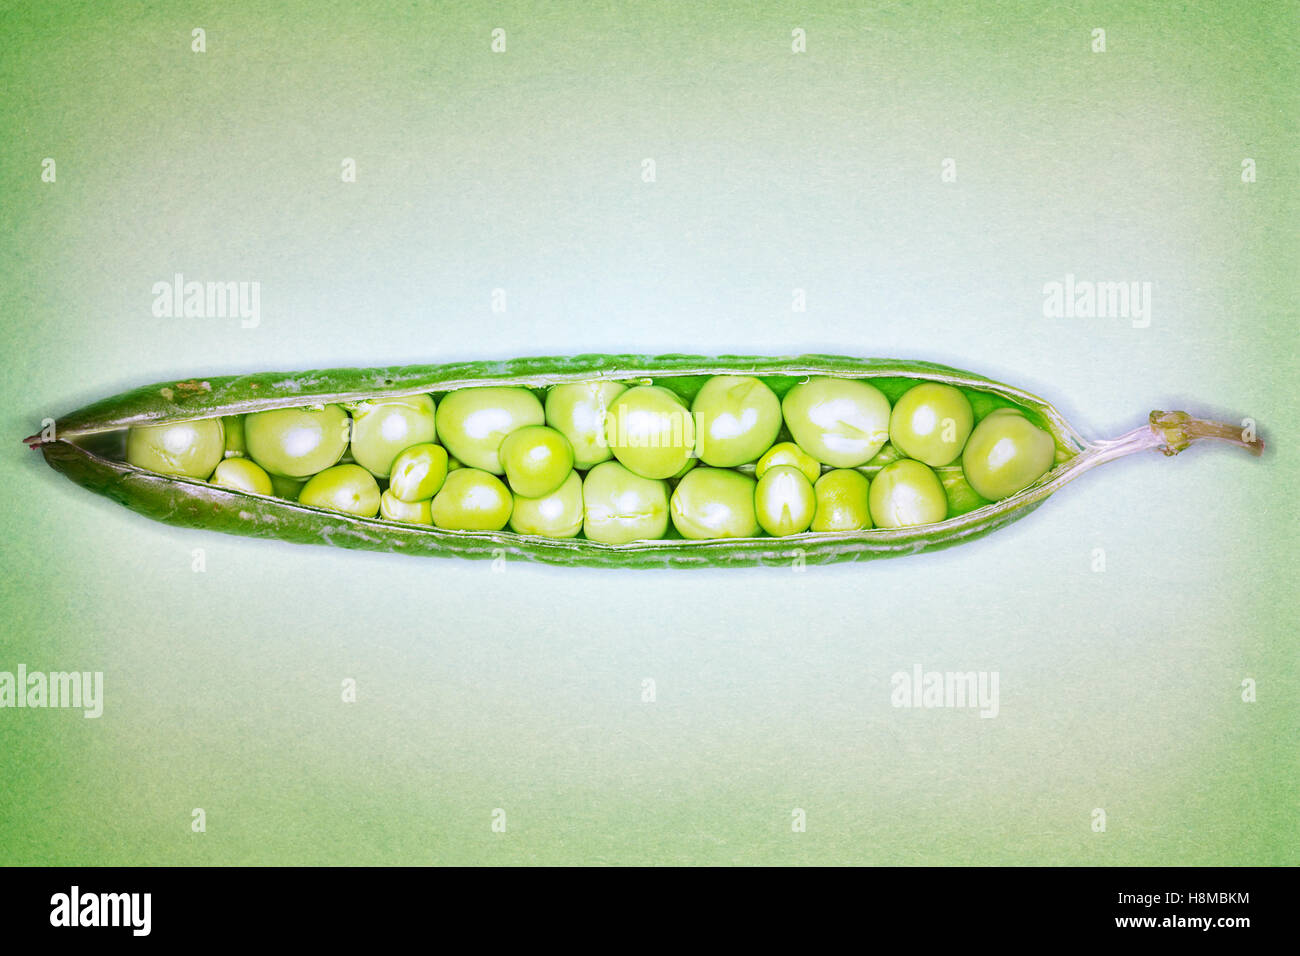 Open pea pod containing peas close-up Stock Photo